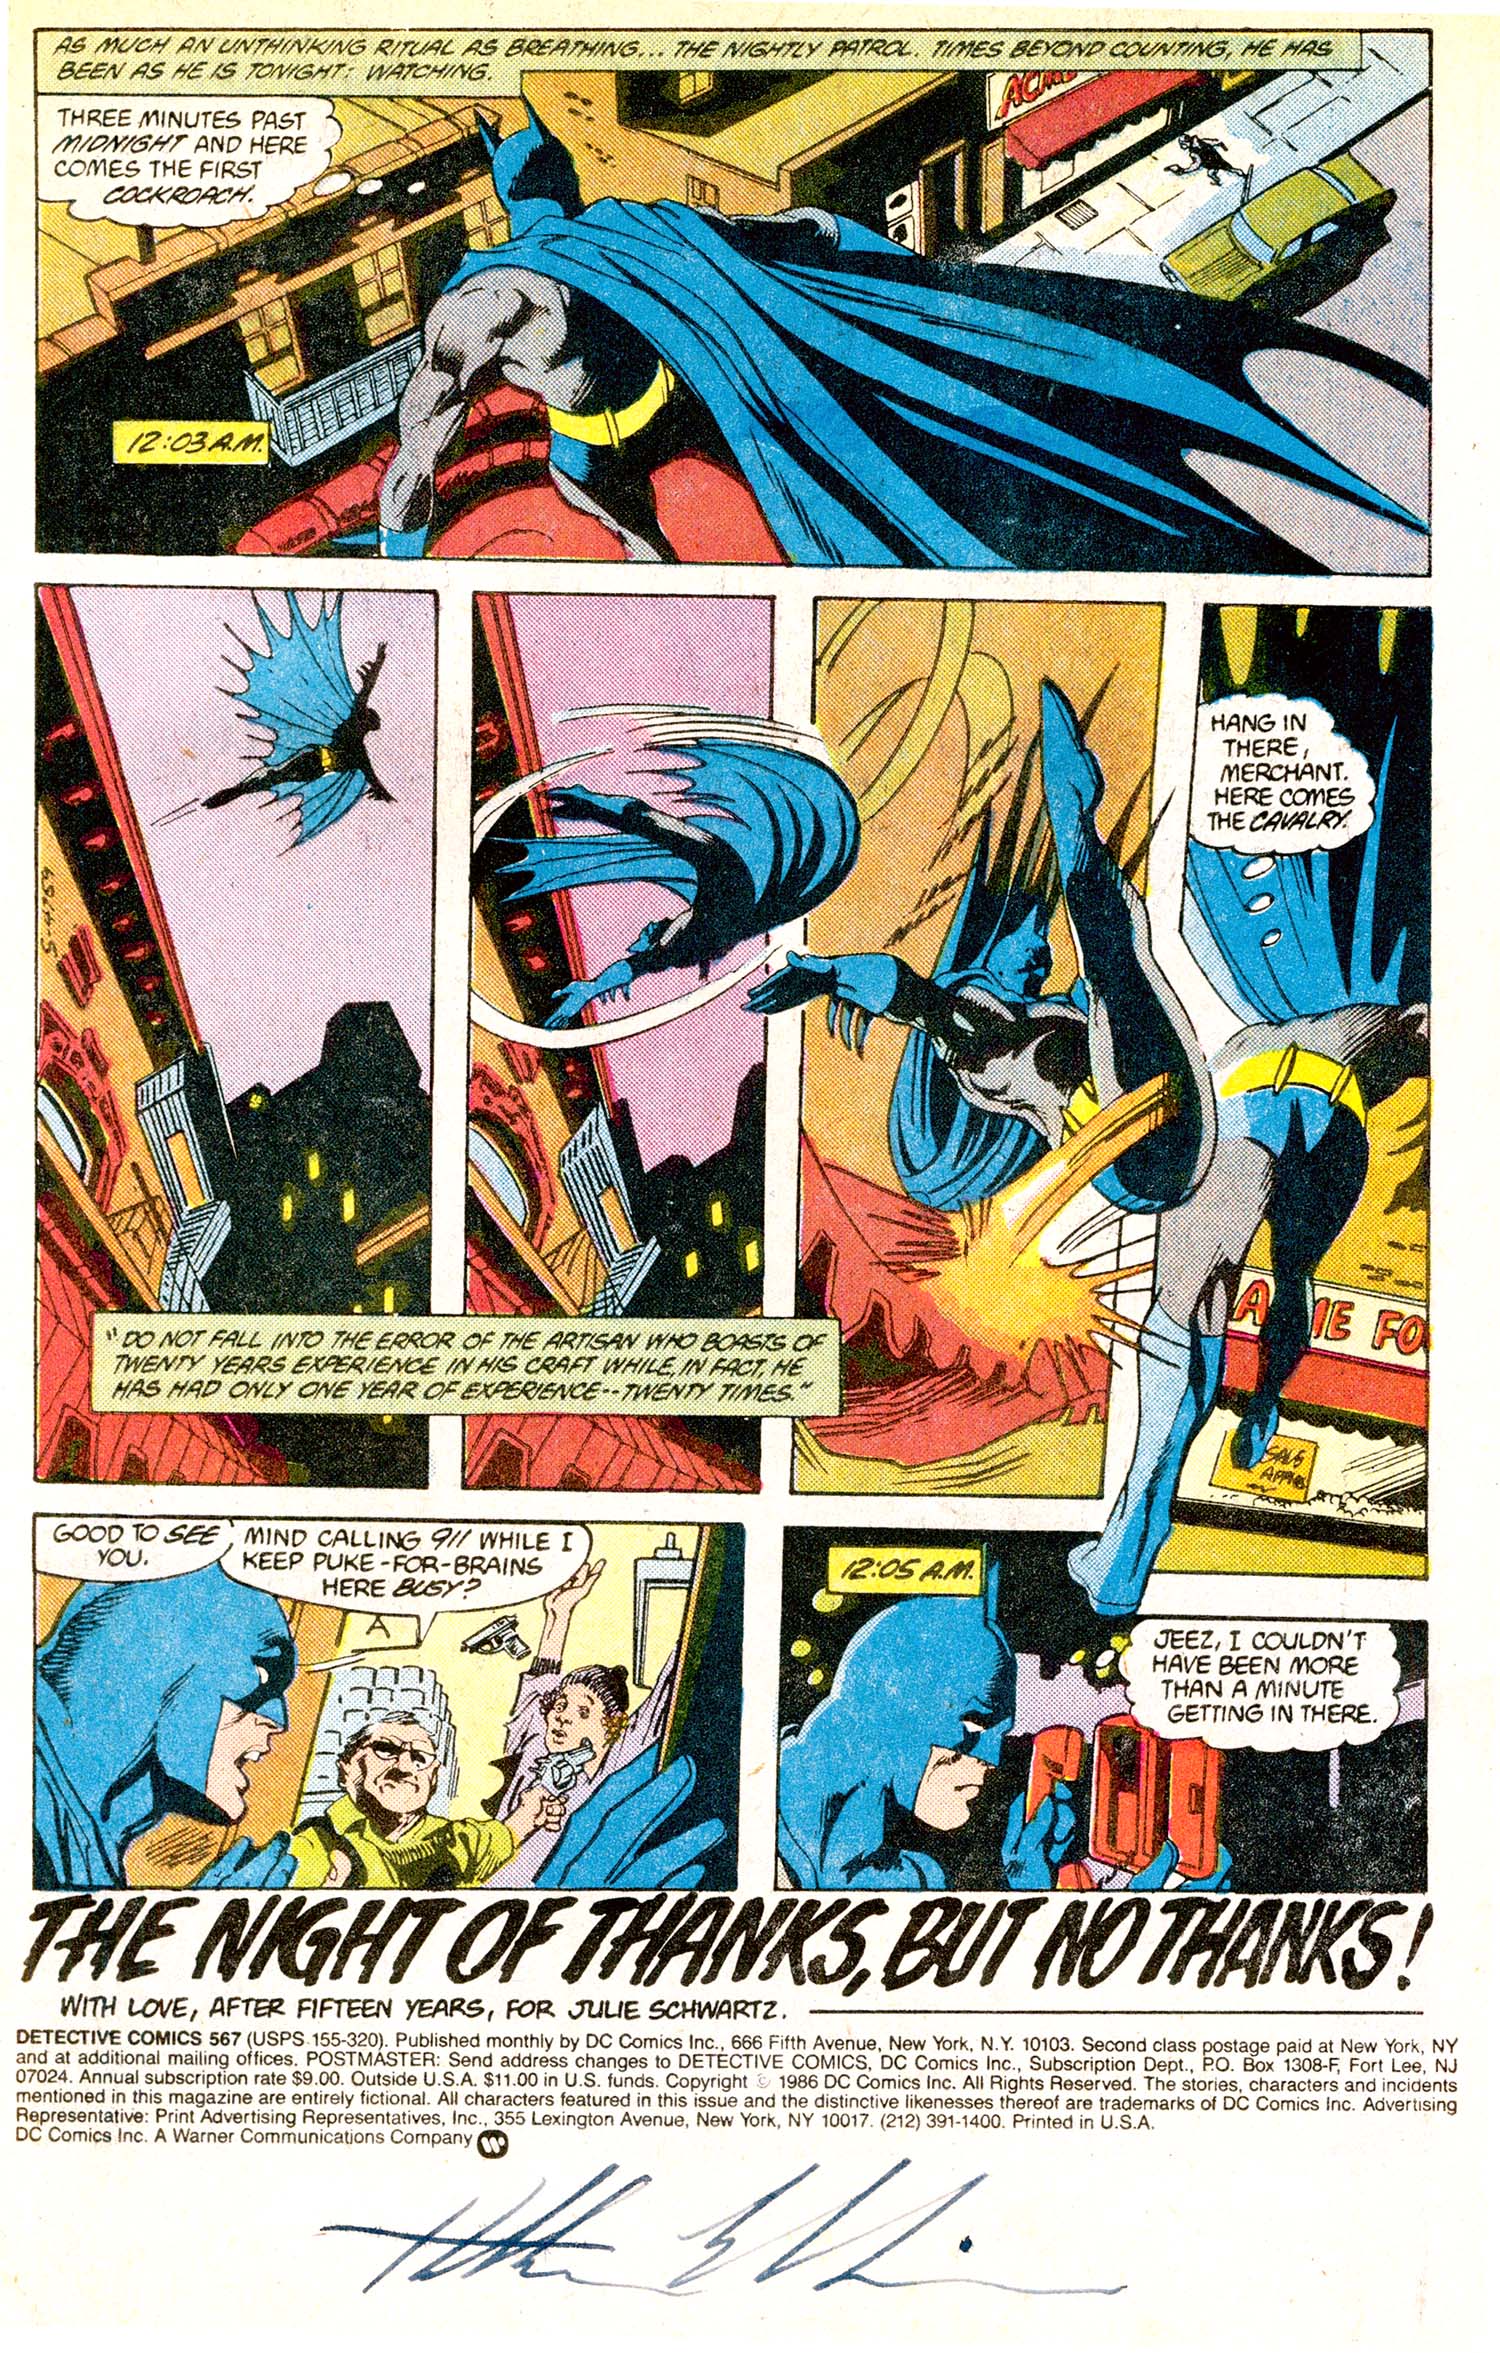 Detective Comics #567, art by Gene Colan and Bob Smith